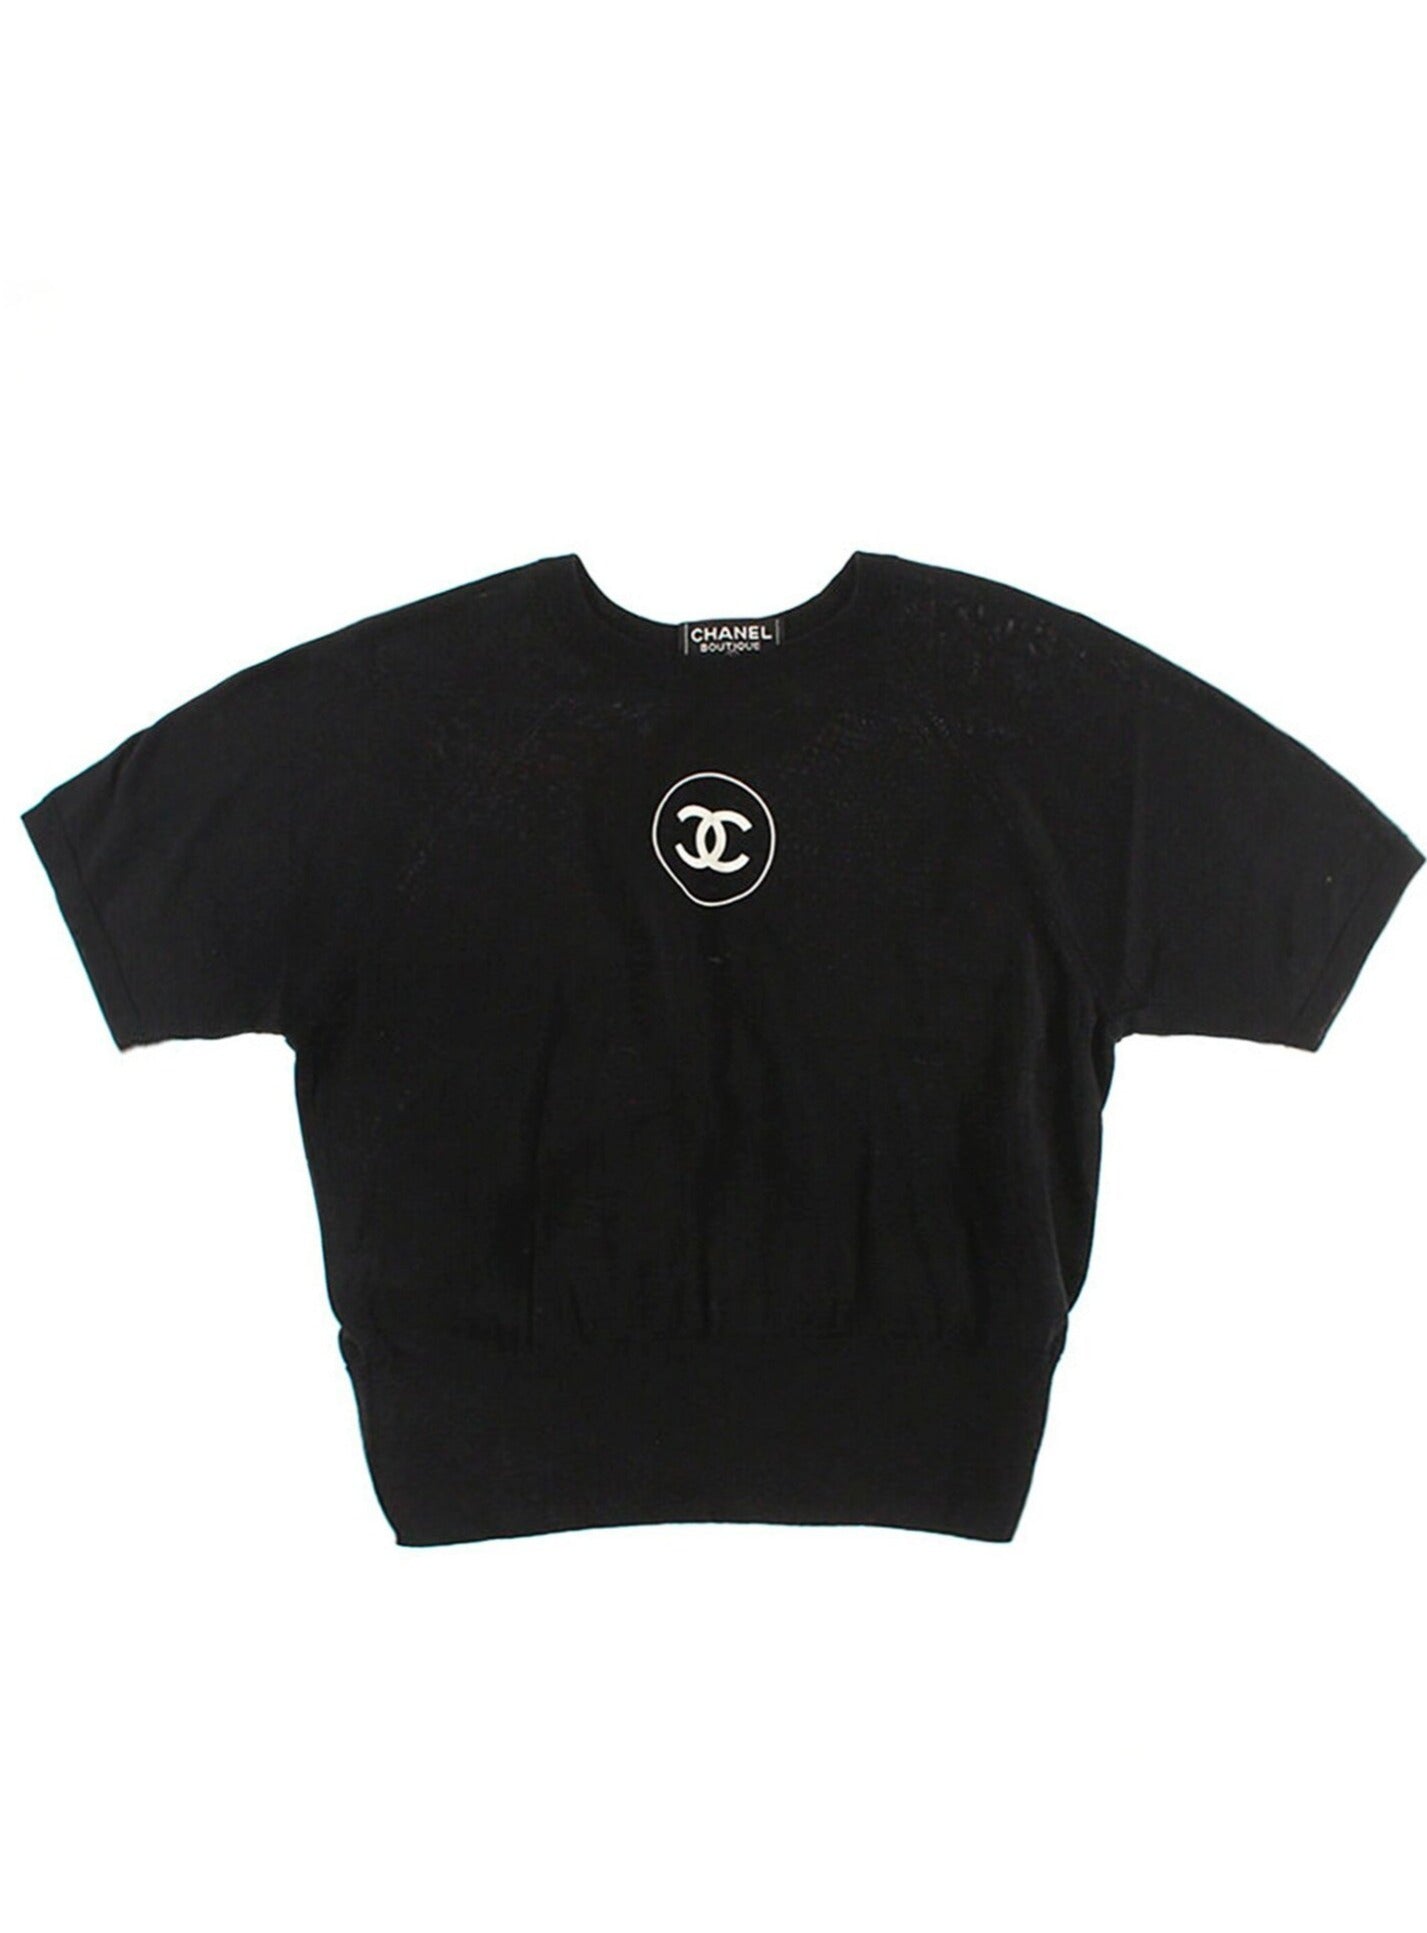 Chanel 2000s Black and Cream Chain CC Shirt · INTO